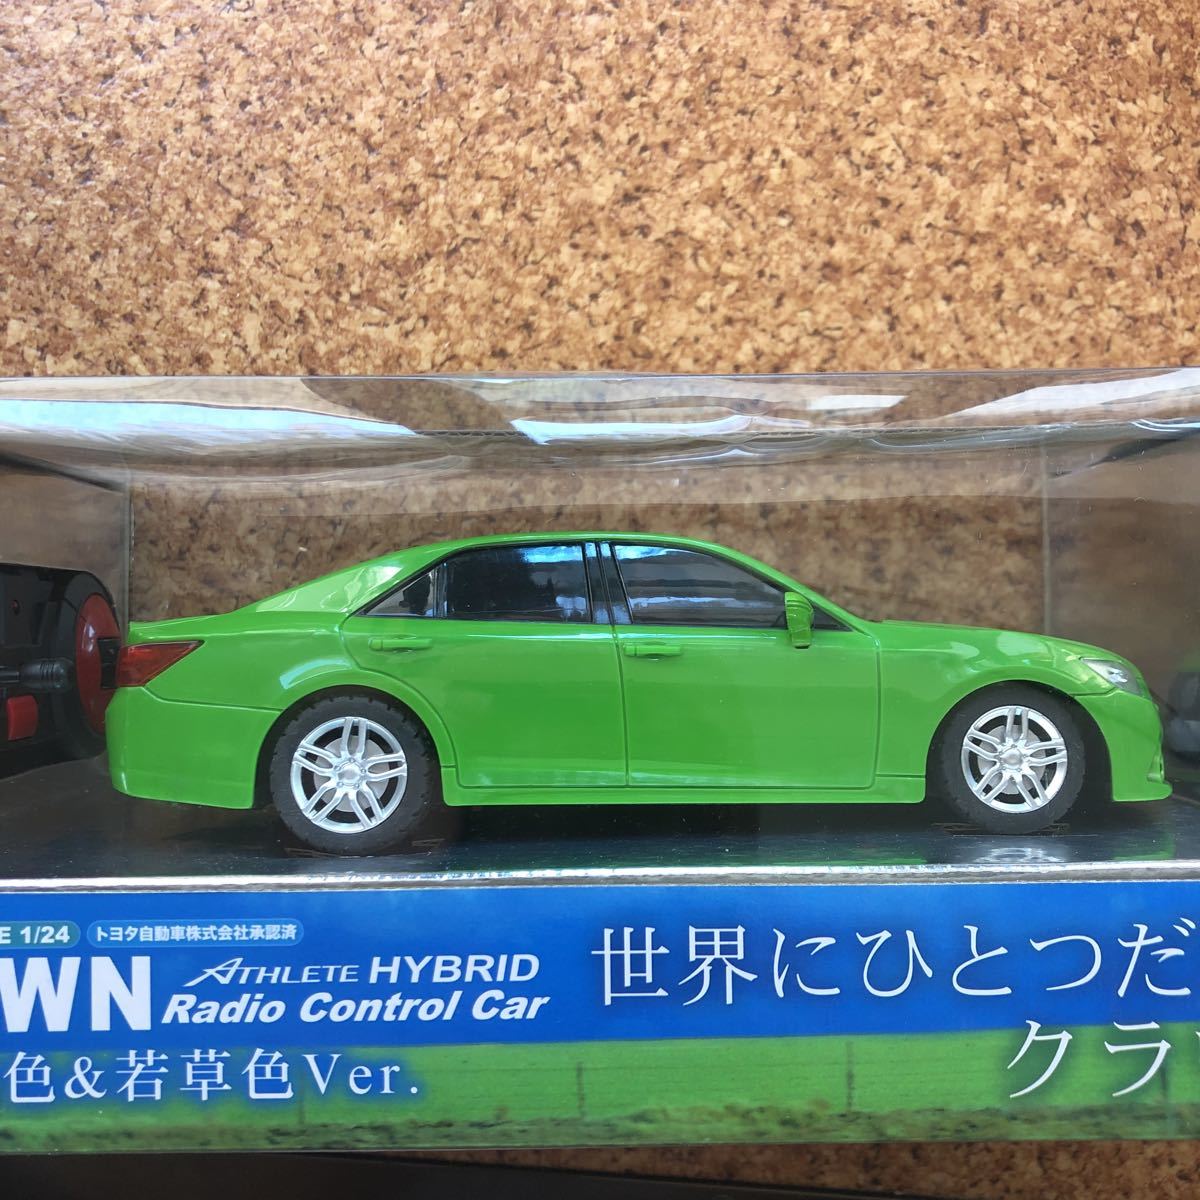 CROWN ATHLETE HYBRID Toyota Crown Athlete hybrid Reborn.. color green color 